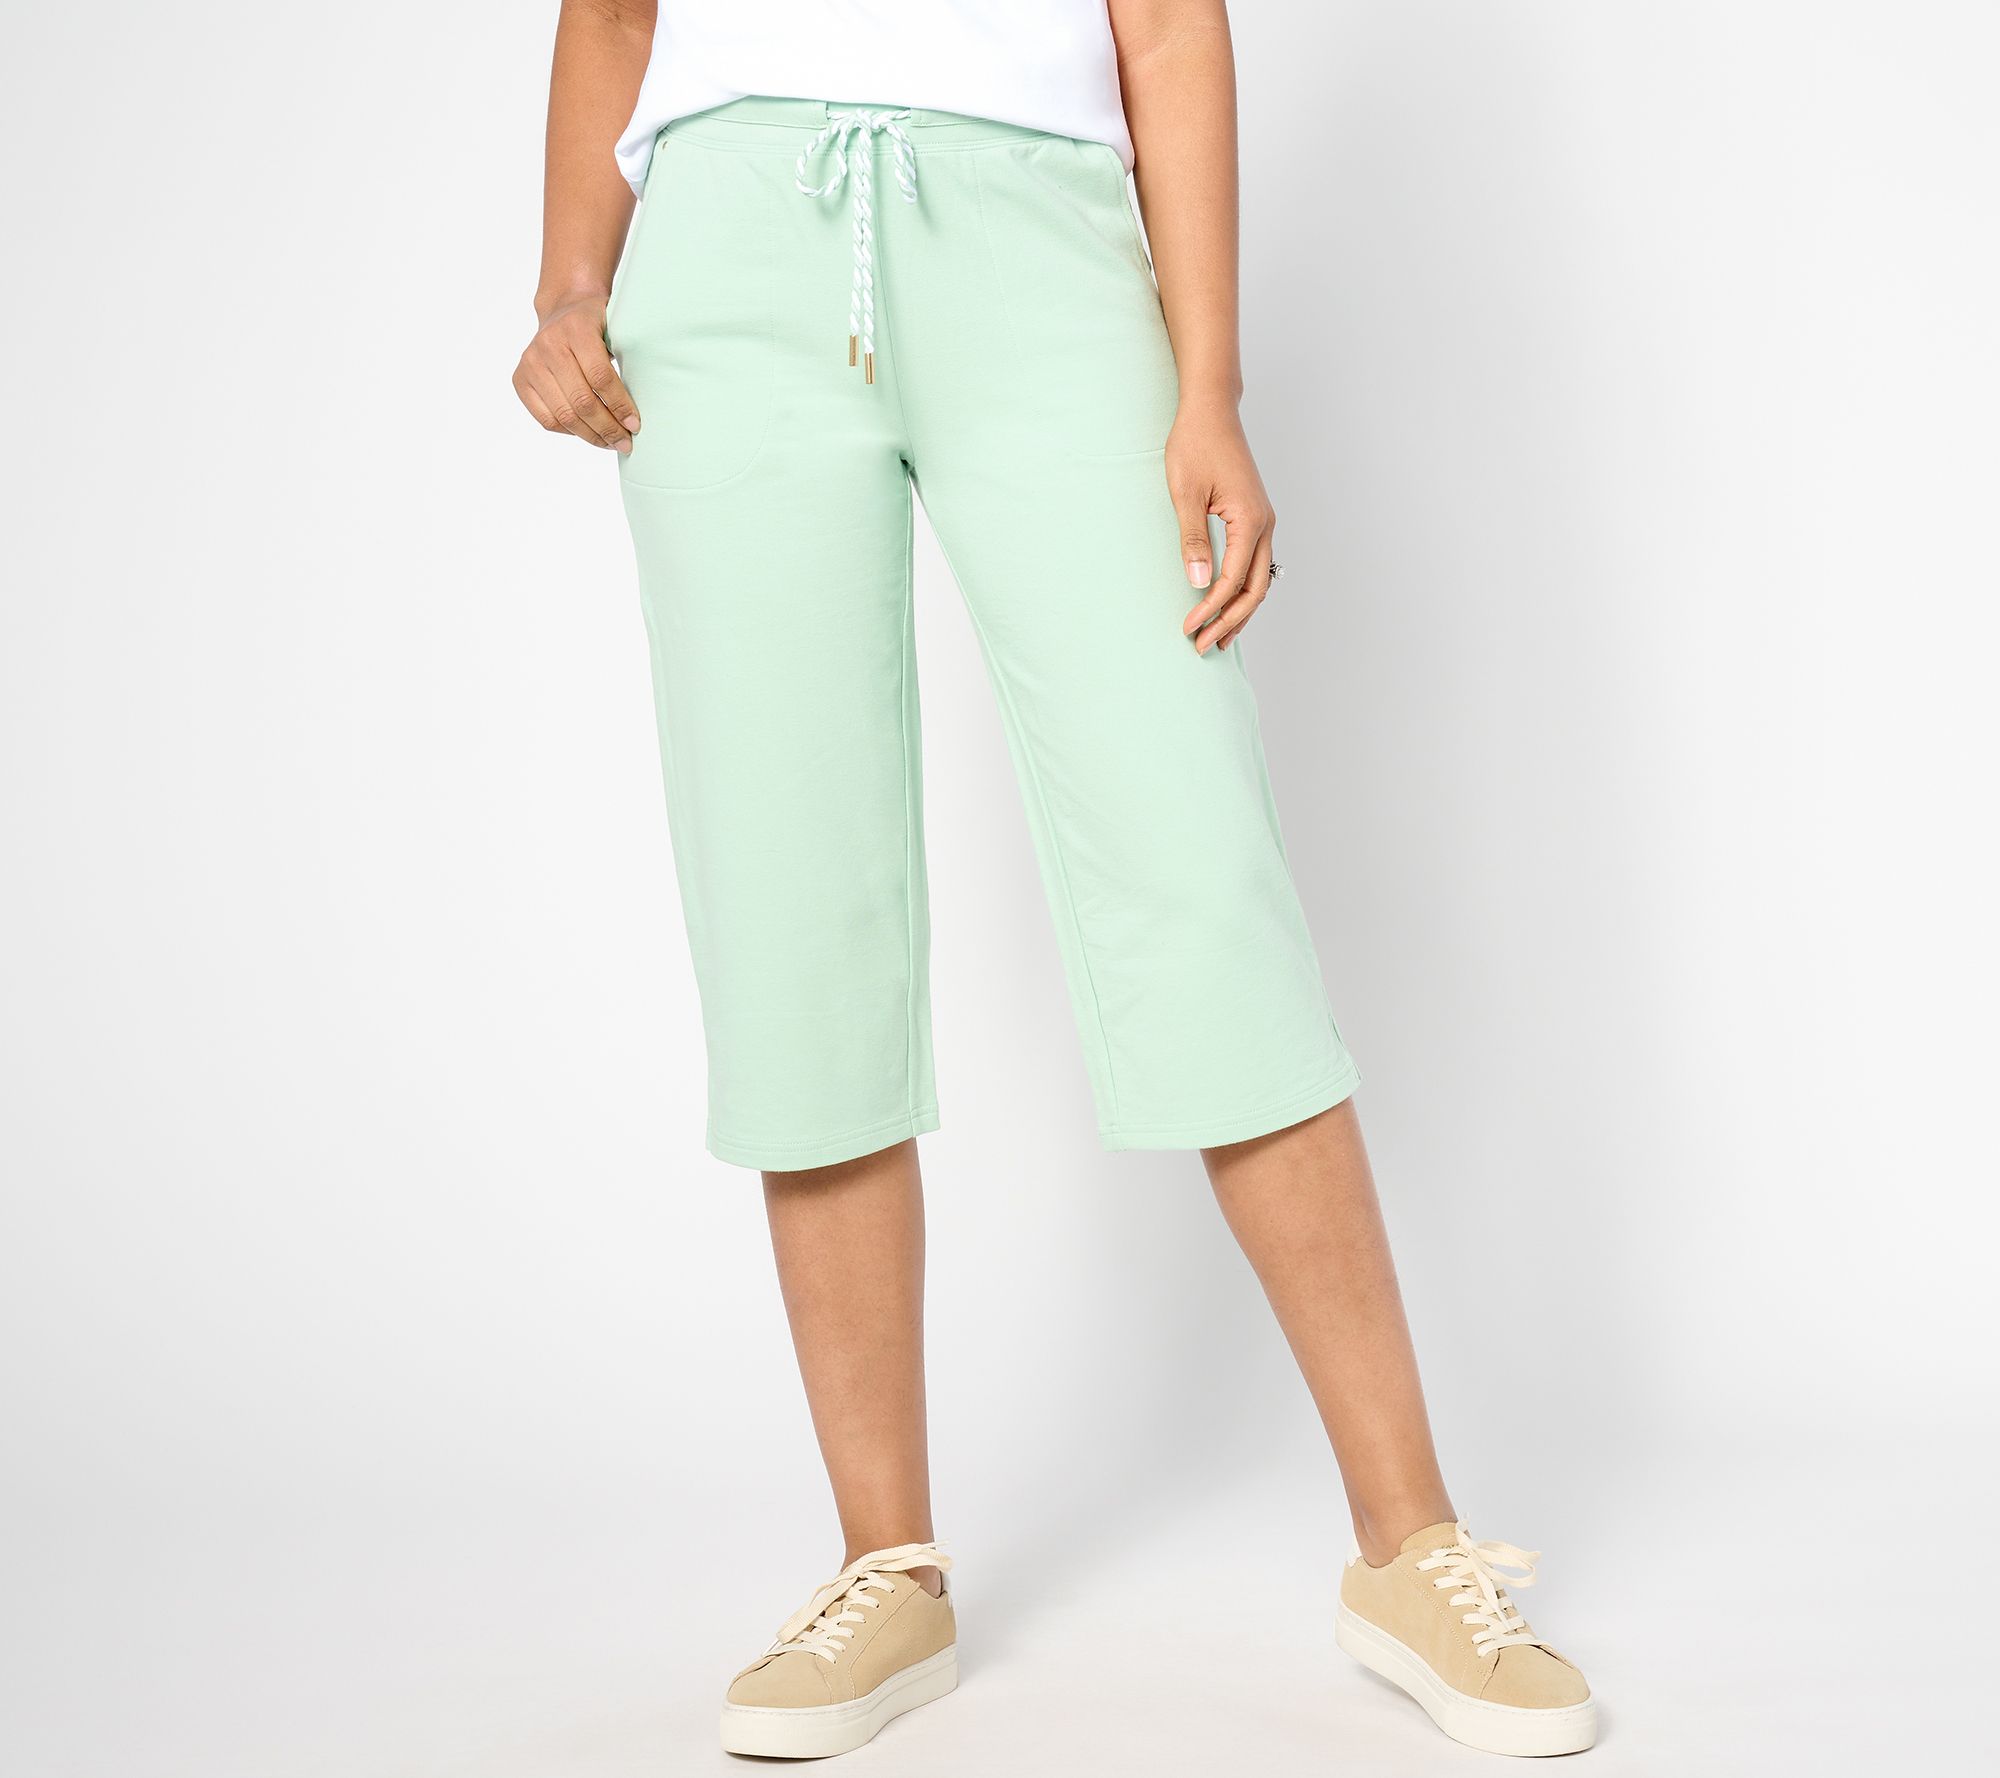 Green - Capri Pants 